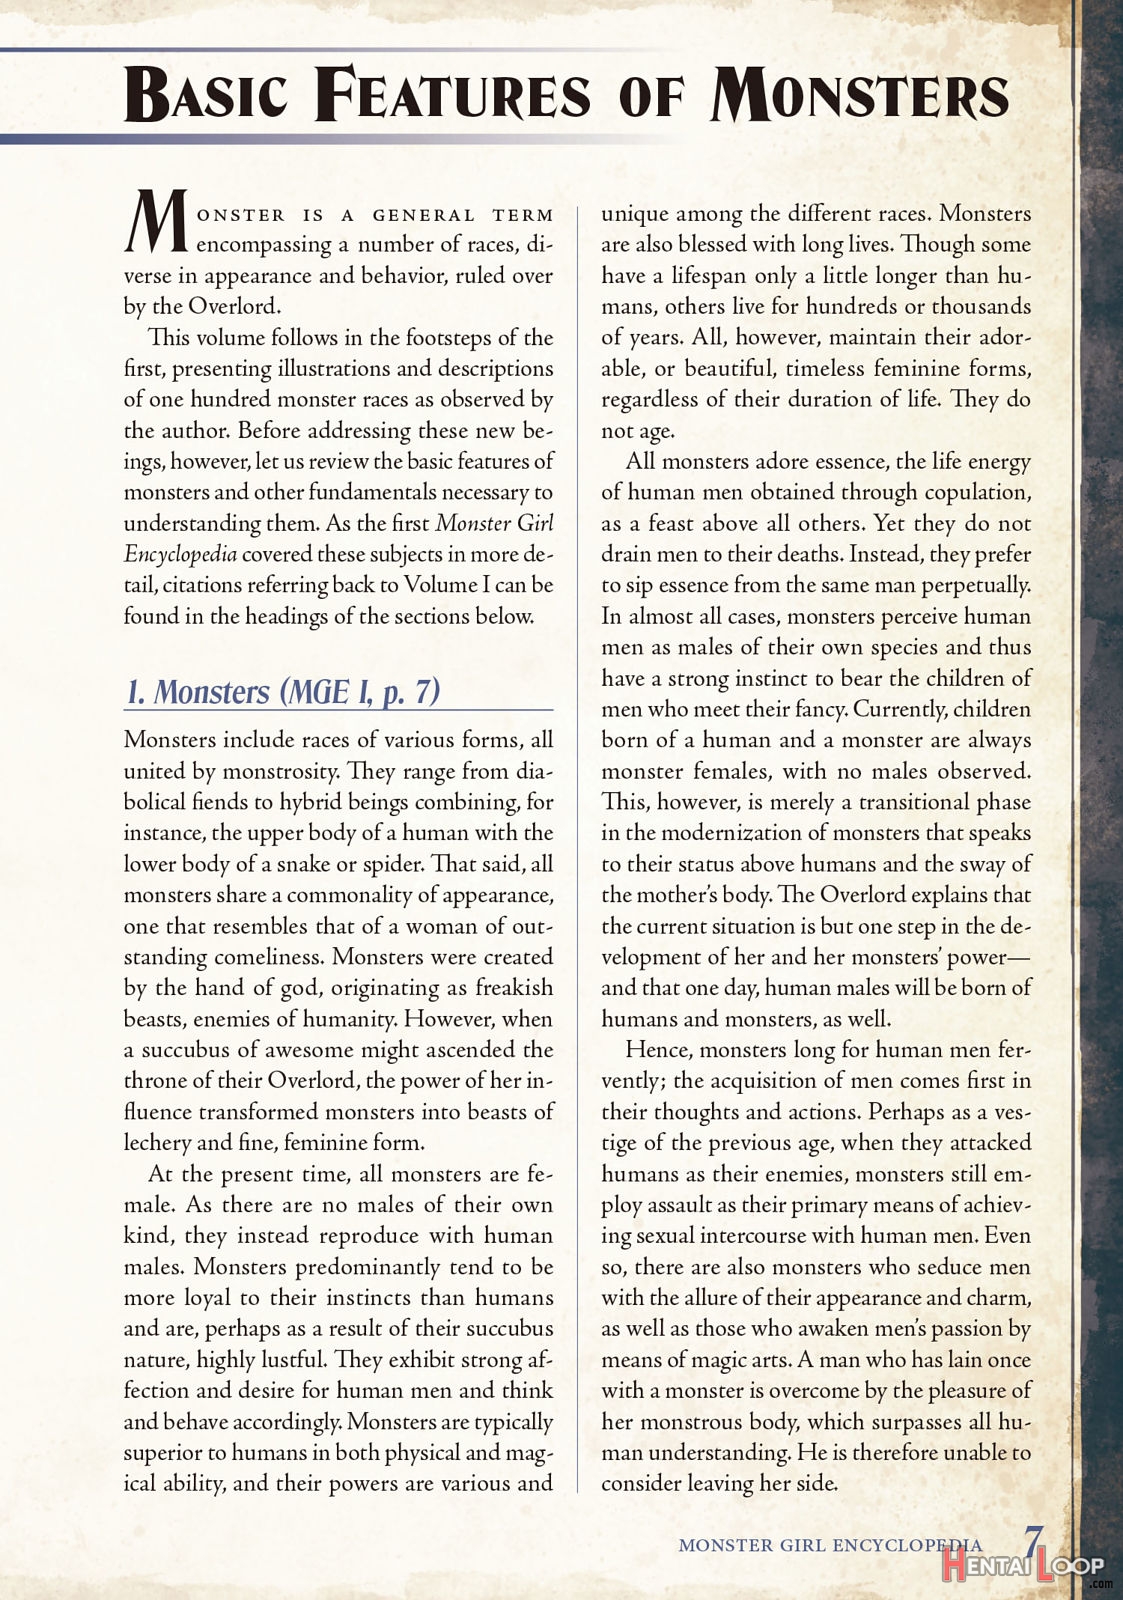 Monster Girl Encyclopedia Vol. 2 page 8